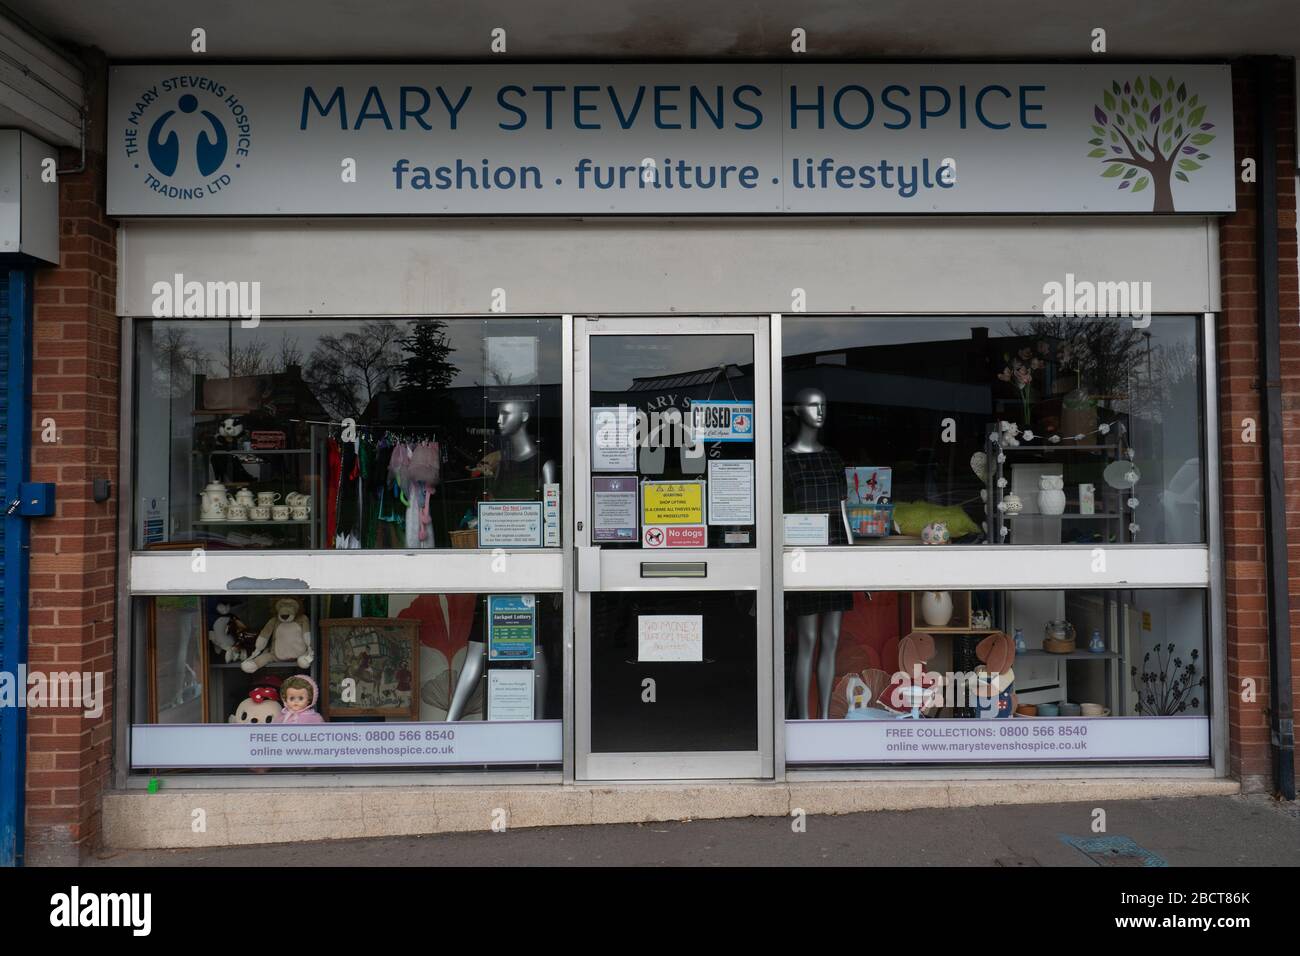 Mary Stevens Hospice Charity Shop, geschlossen wegen Coronavirus, Covid 19, Pandemie, April 2020. West Midlands. GROSSBRITANNIEN. Stockfoto